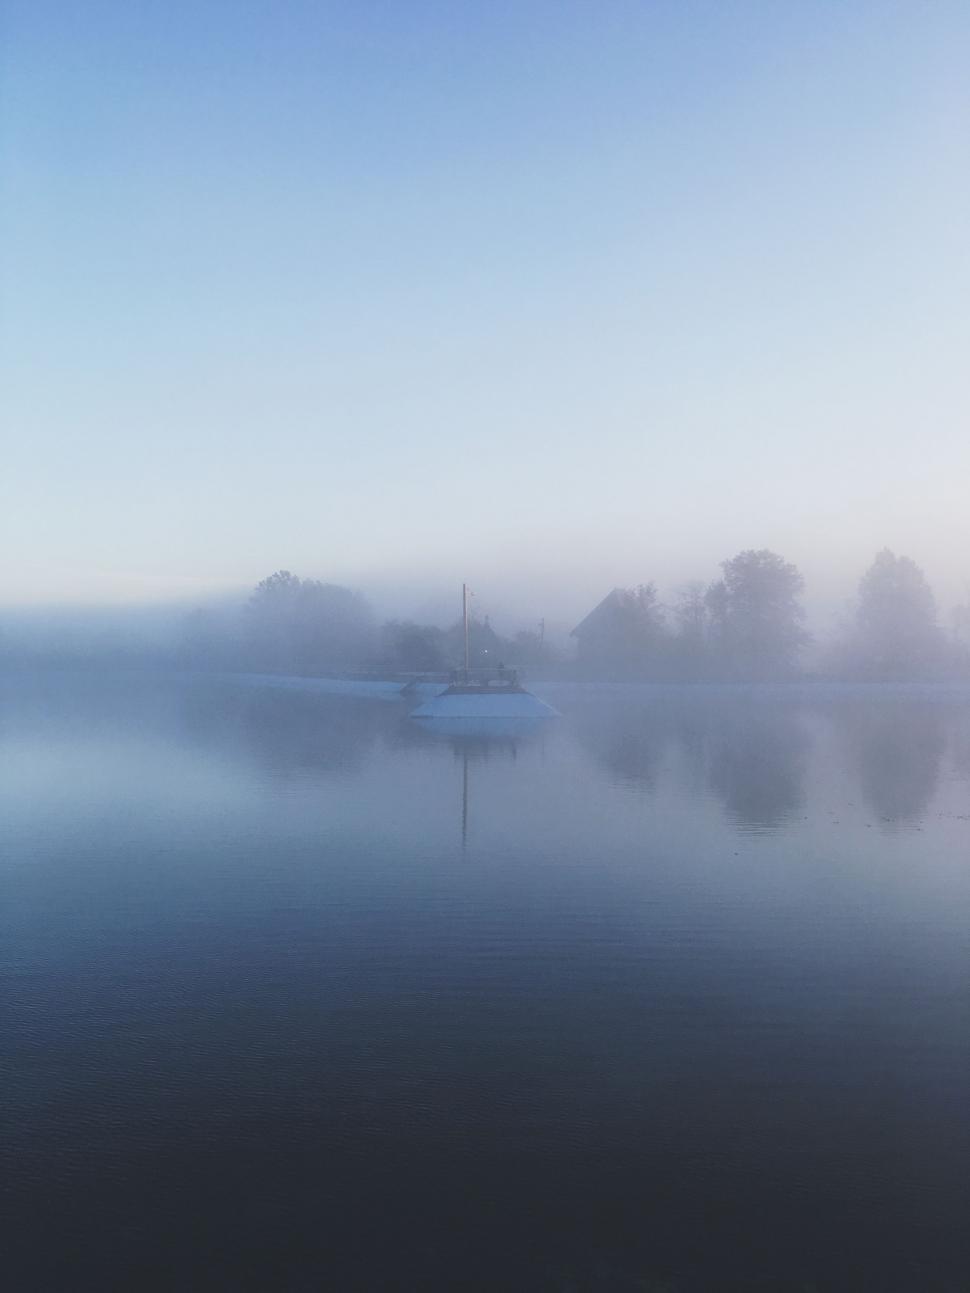 Free Image of Boat on a Foggy Lake 